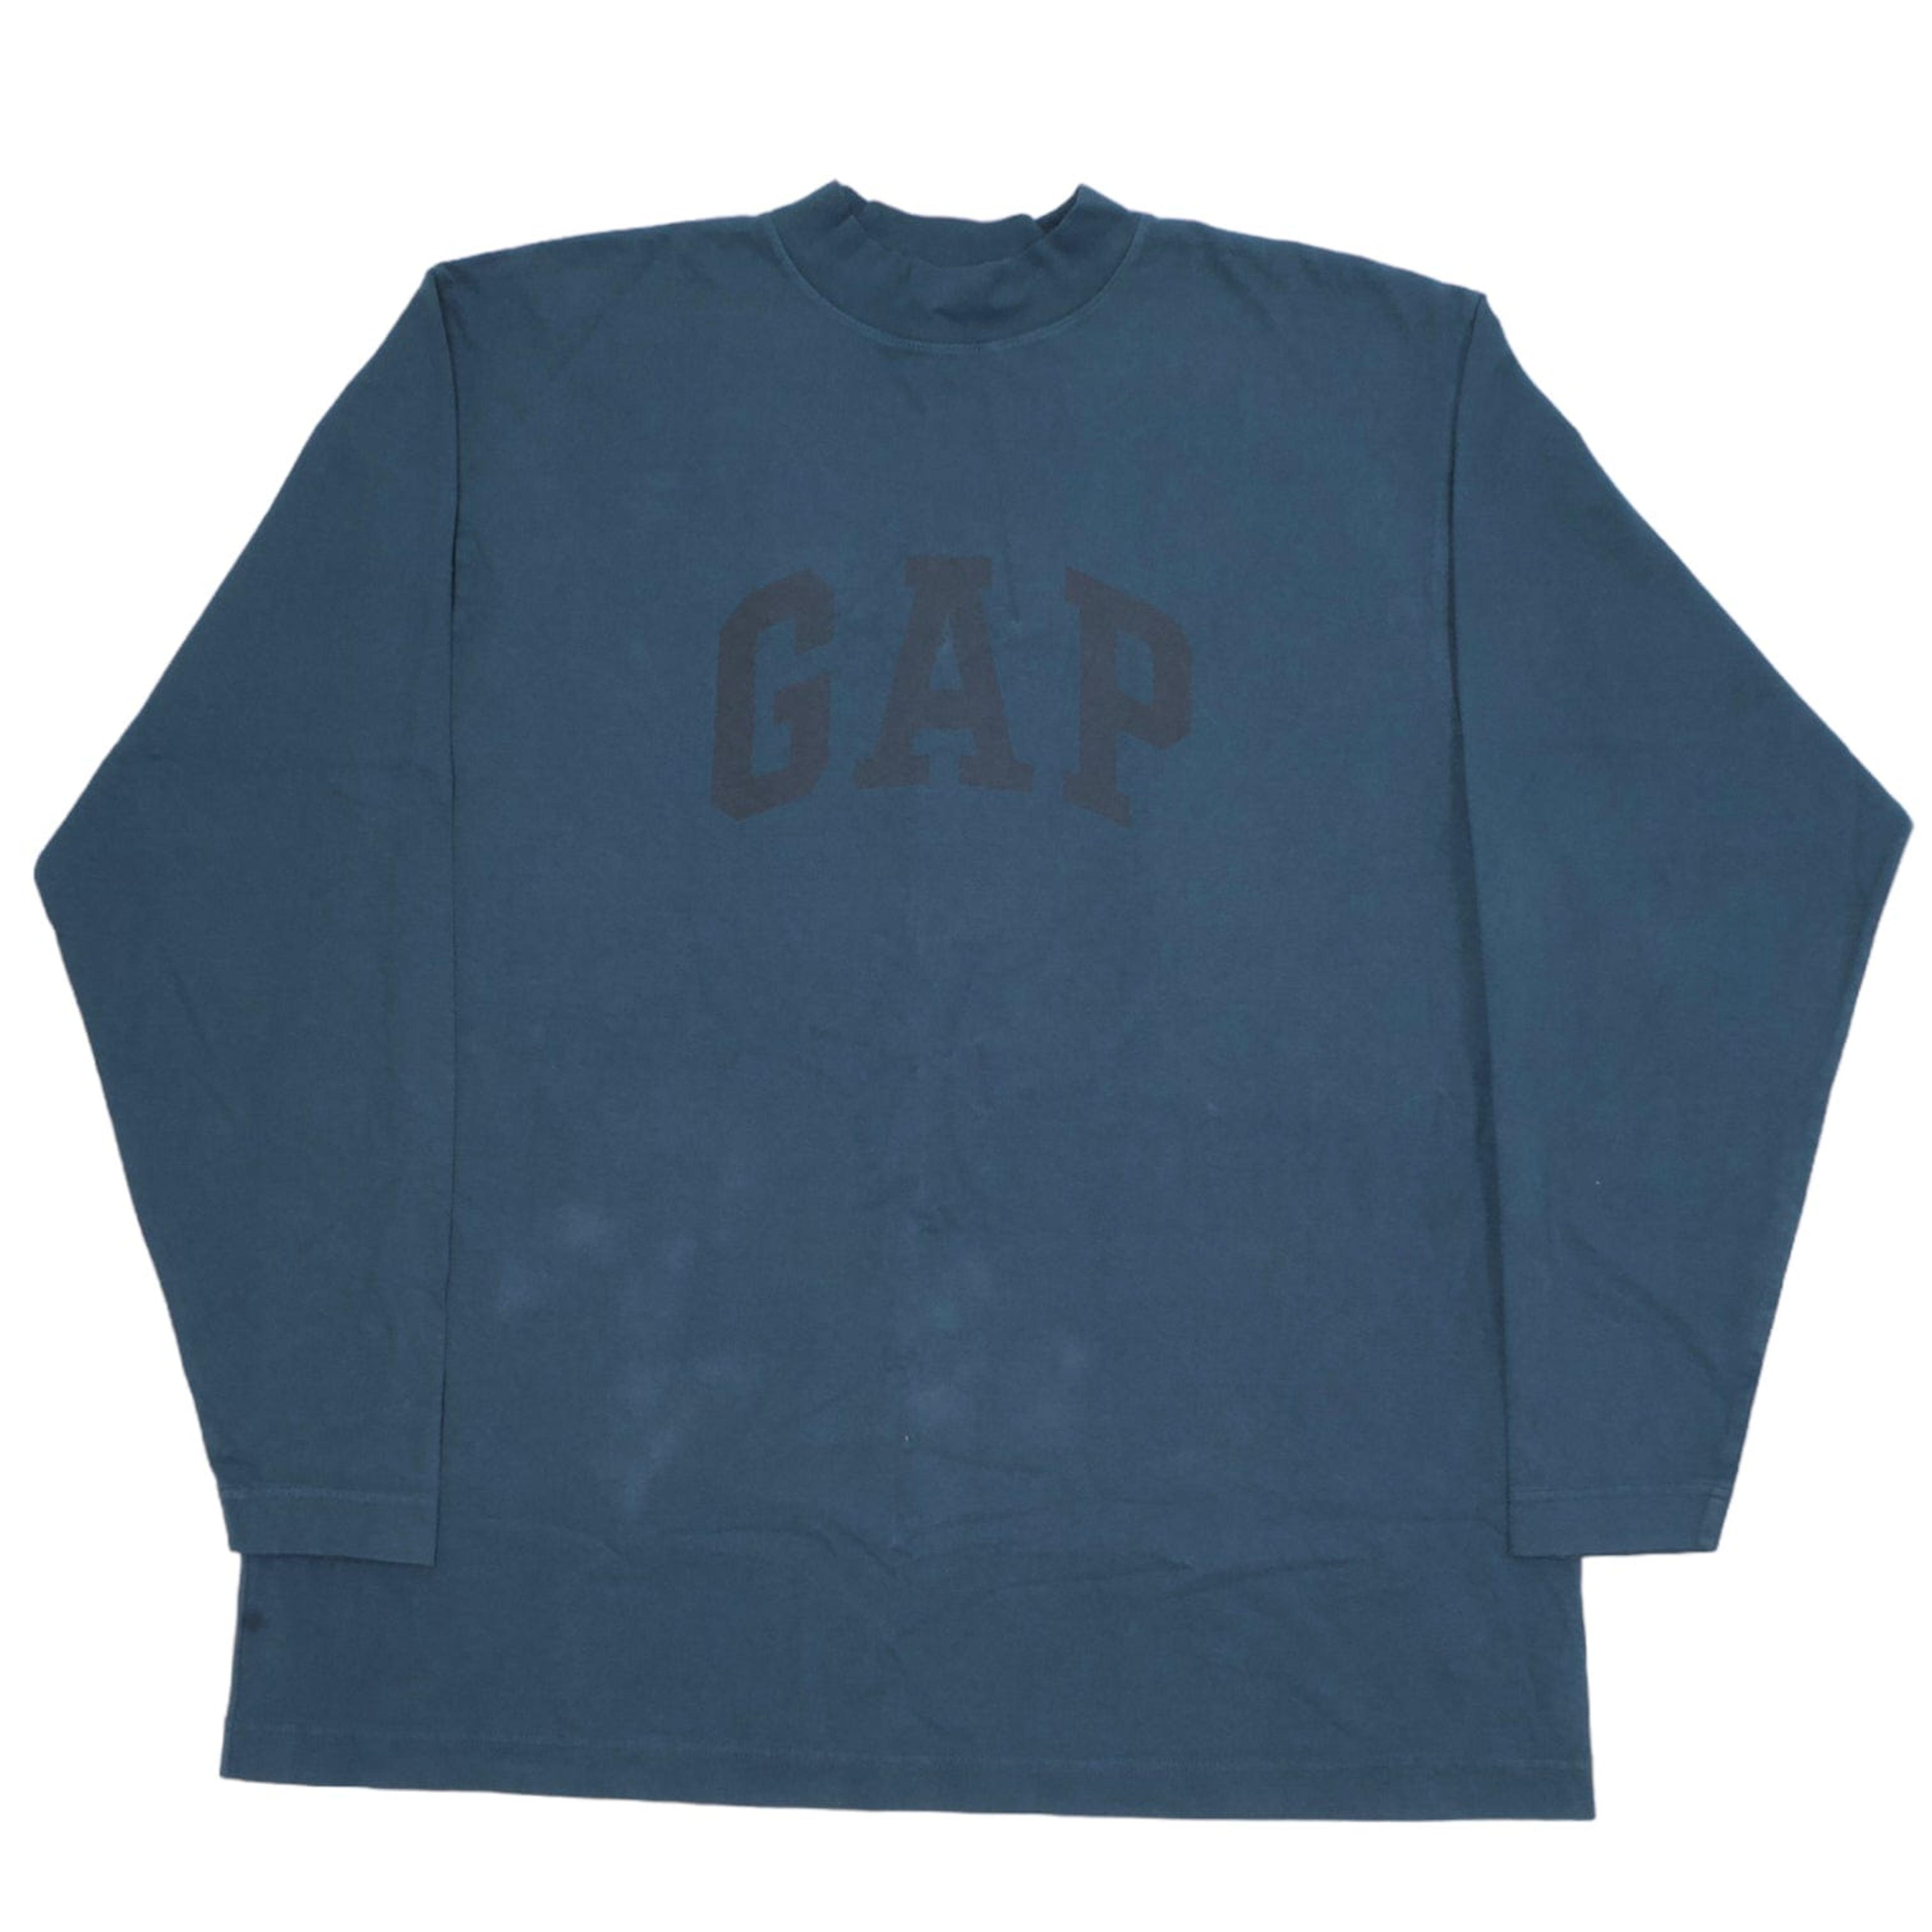 Yeezy Gap Dove Long Sleeve Tee Shirt Dark Blue Pre-Owned